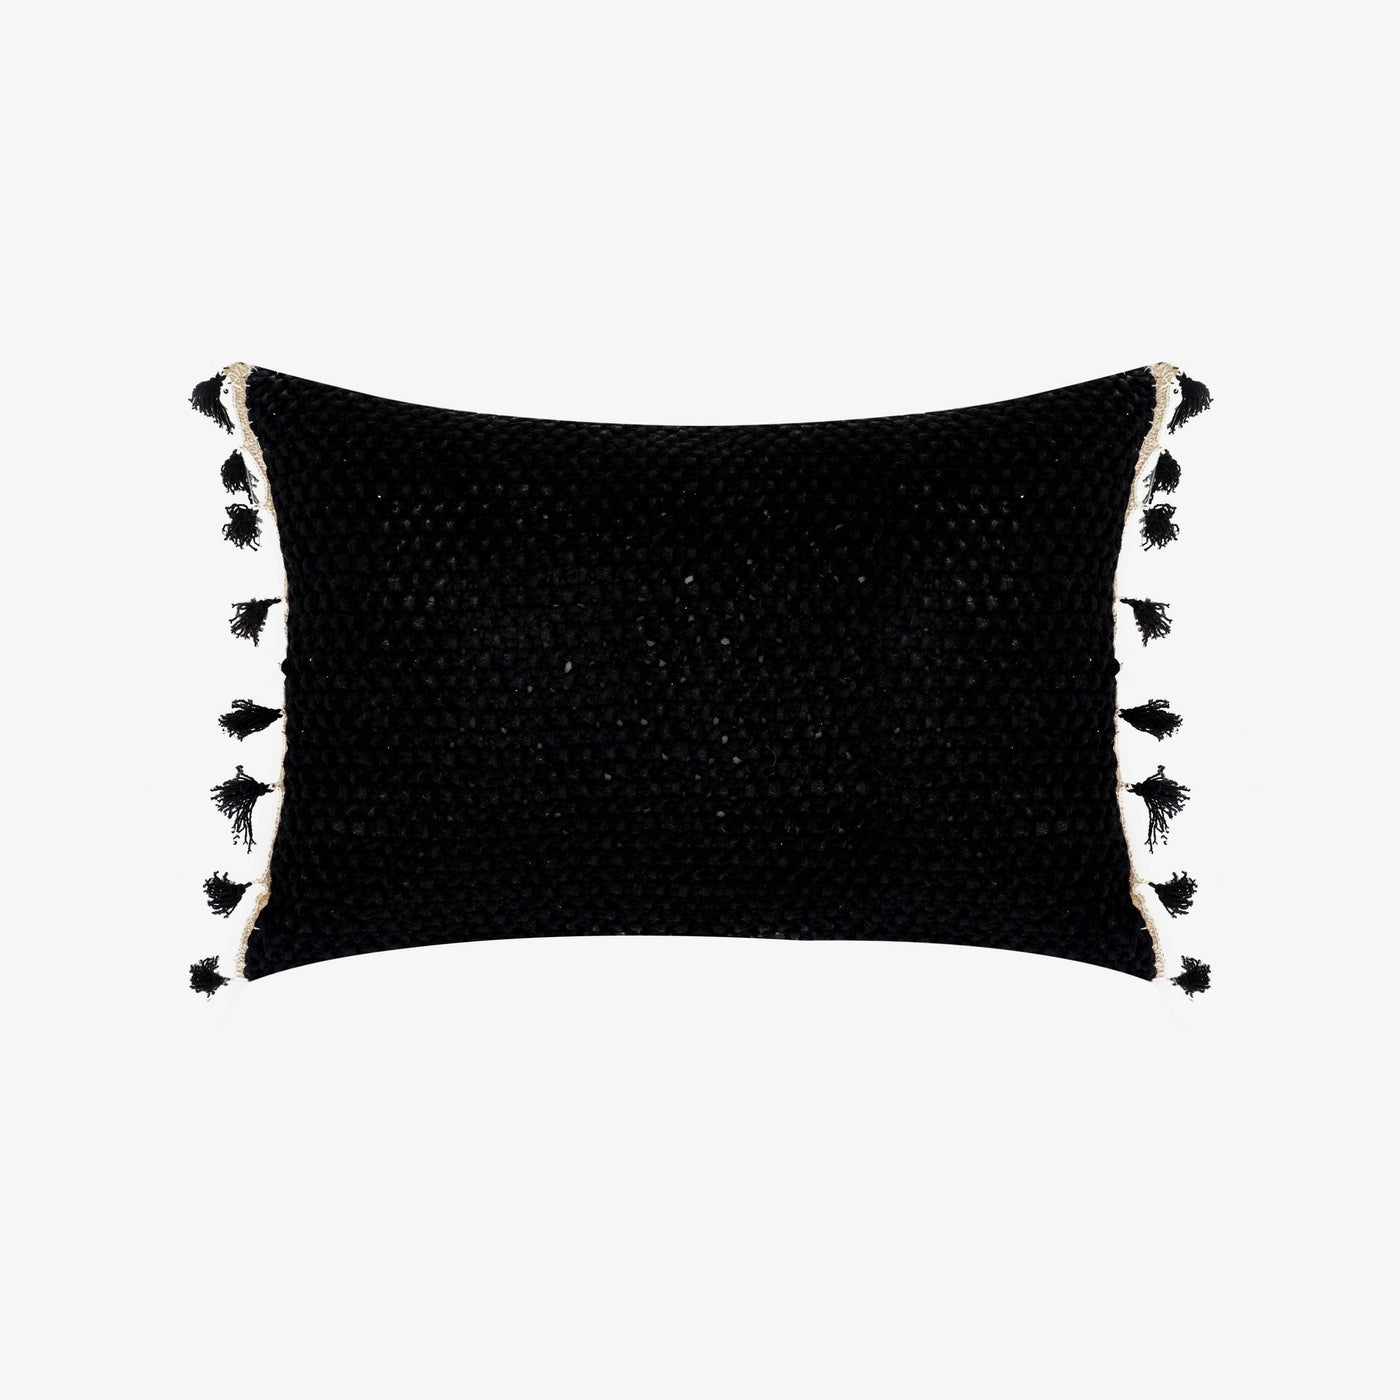 Hurley Cushion Cover, Black, 45x60 cm Cushion Covers sazy.com